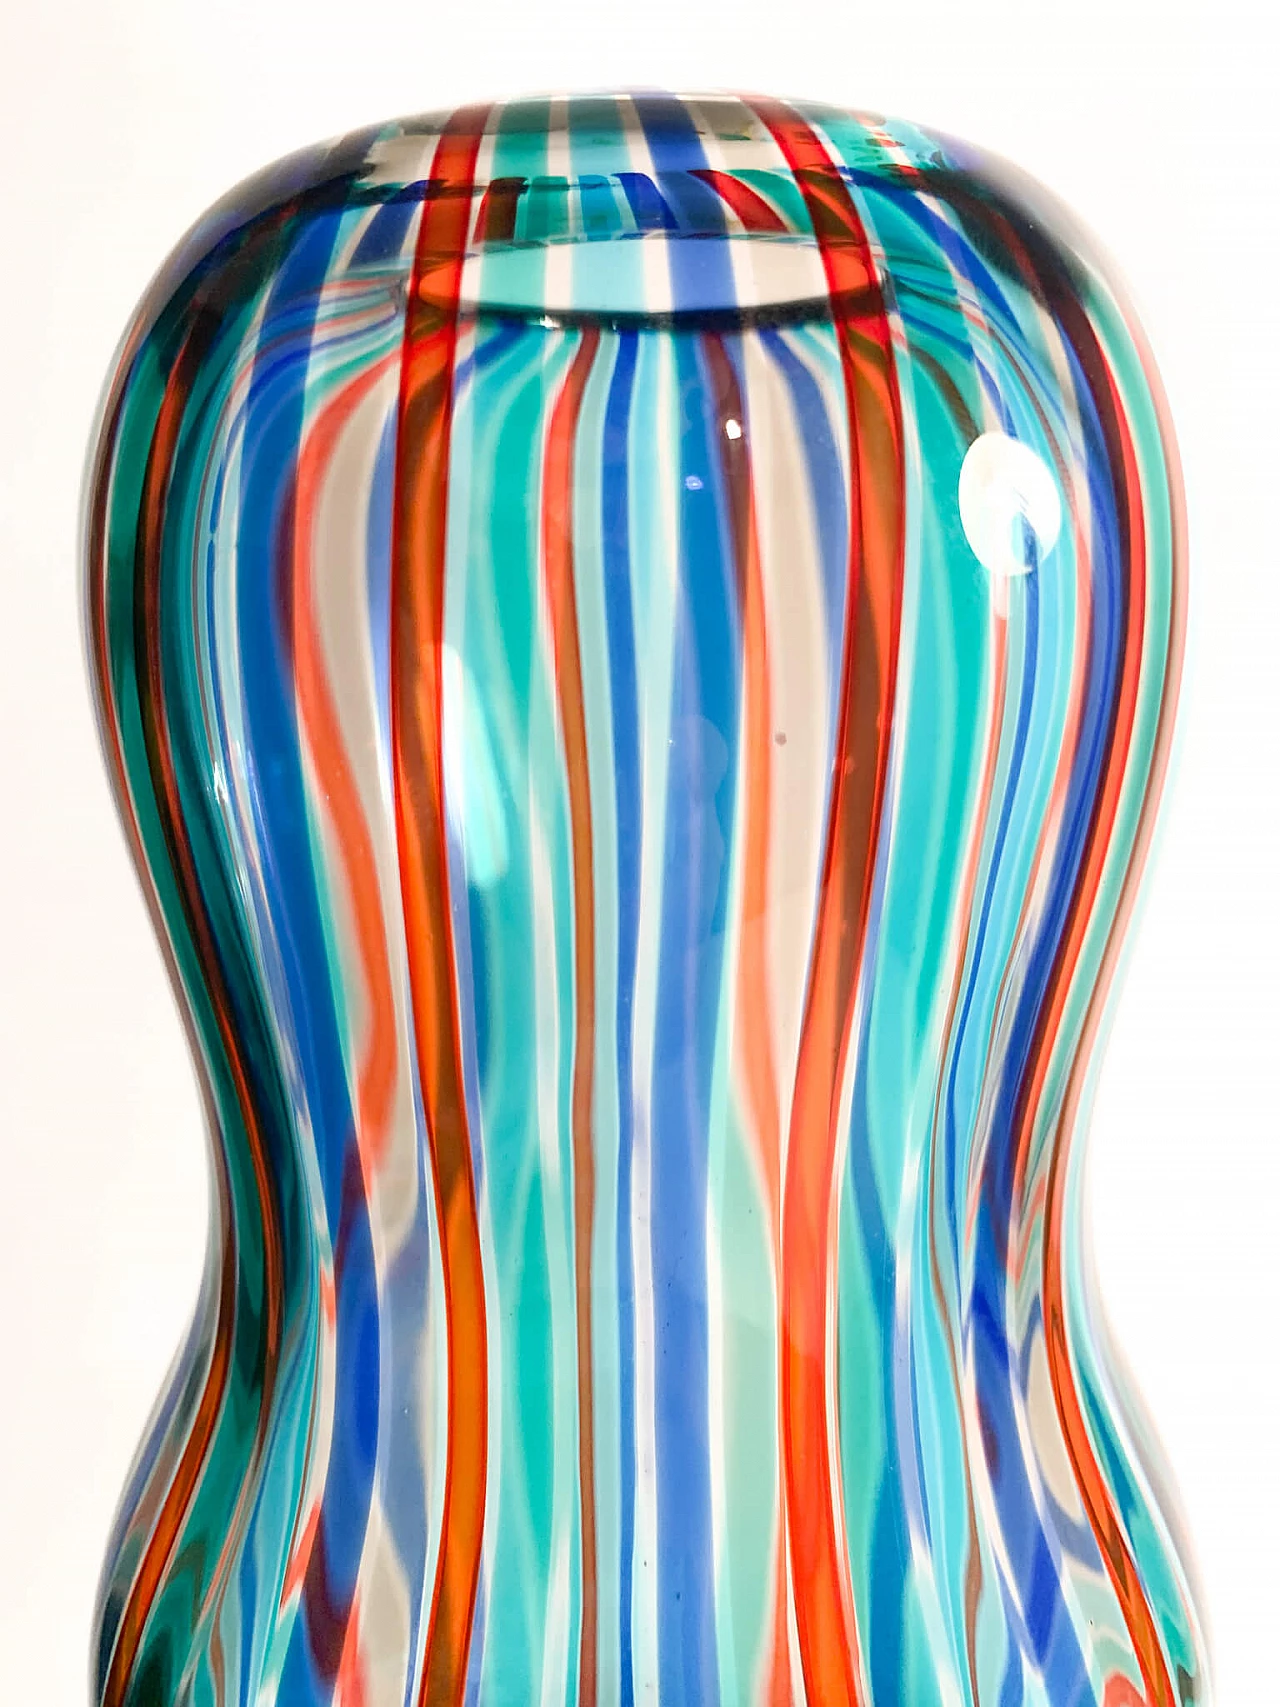 Arado vase in Murano glass by Alessandro Mendini for Venini, 1988 11